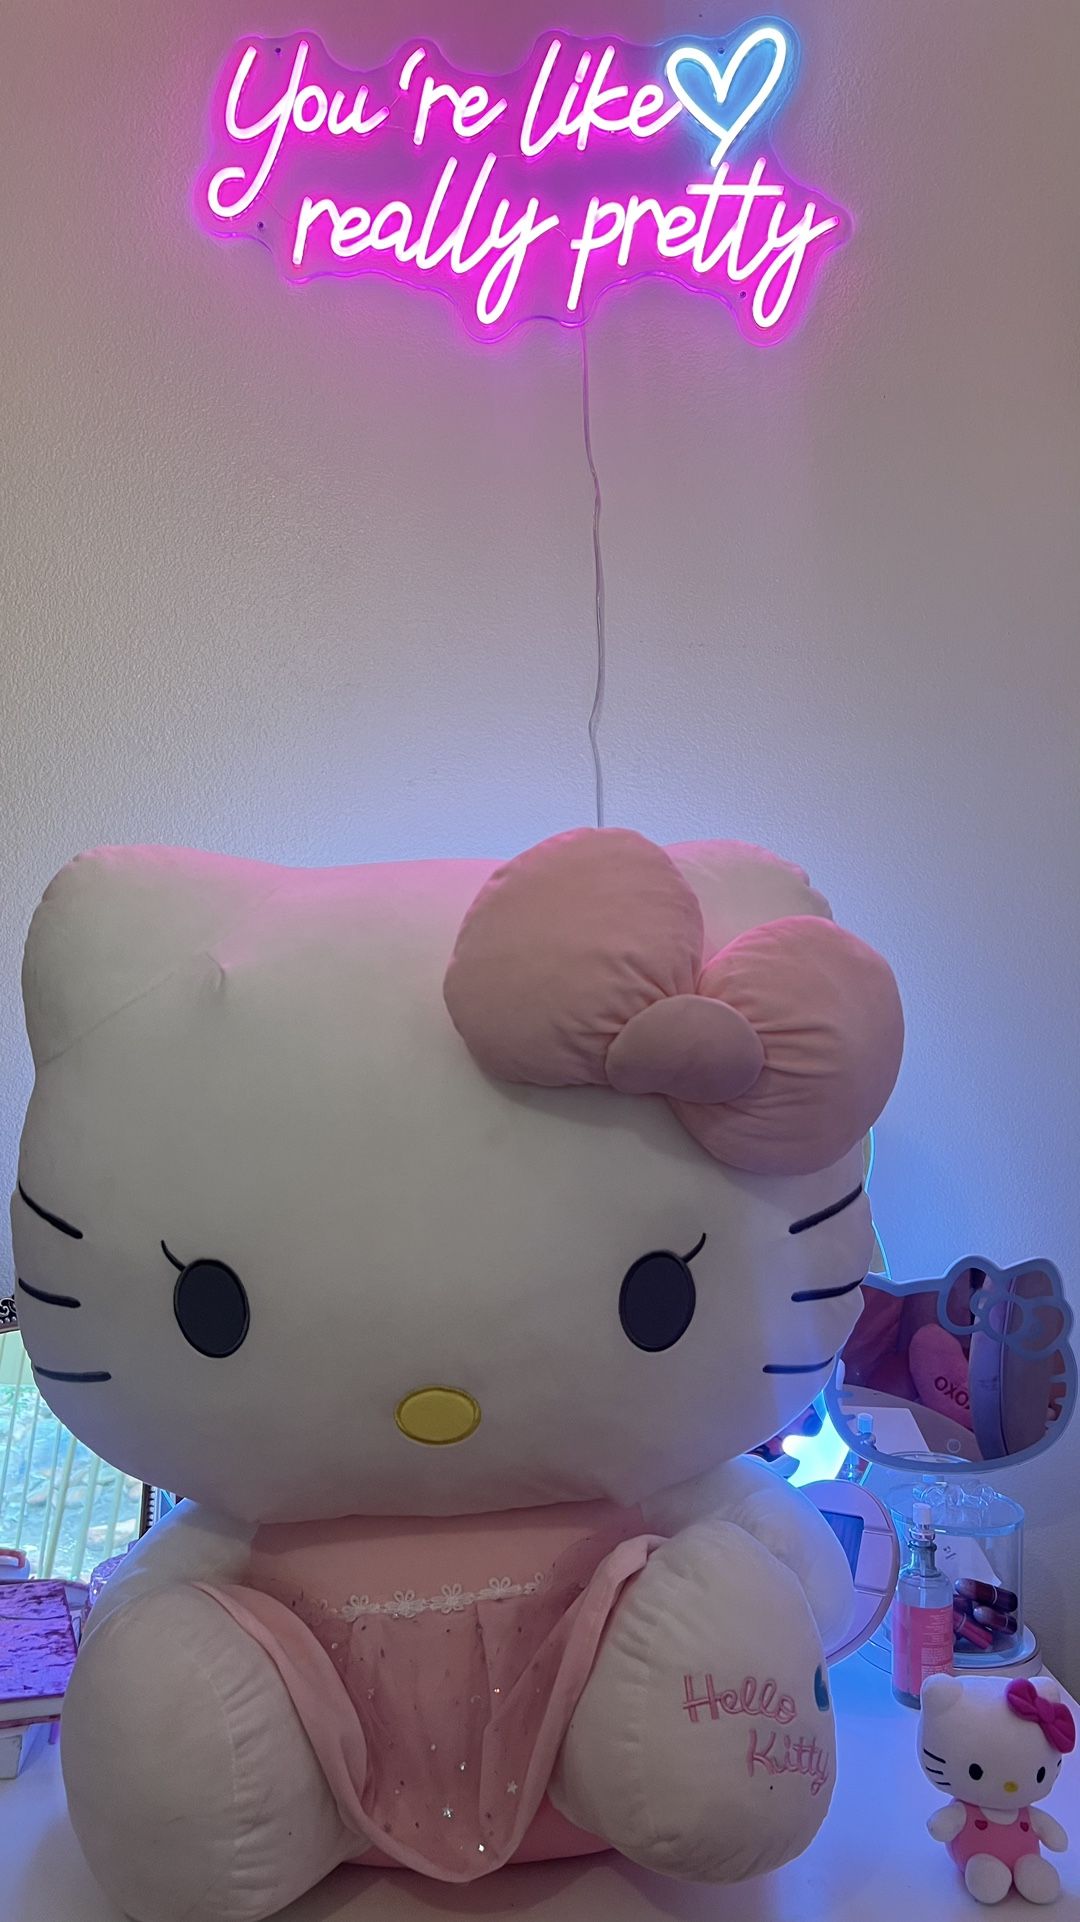 Huge Hello Kitty Plushie